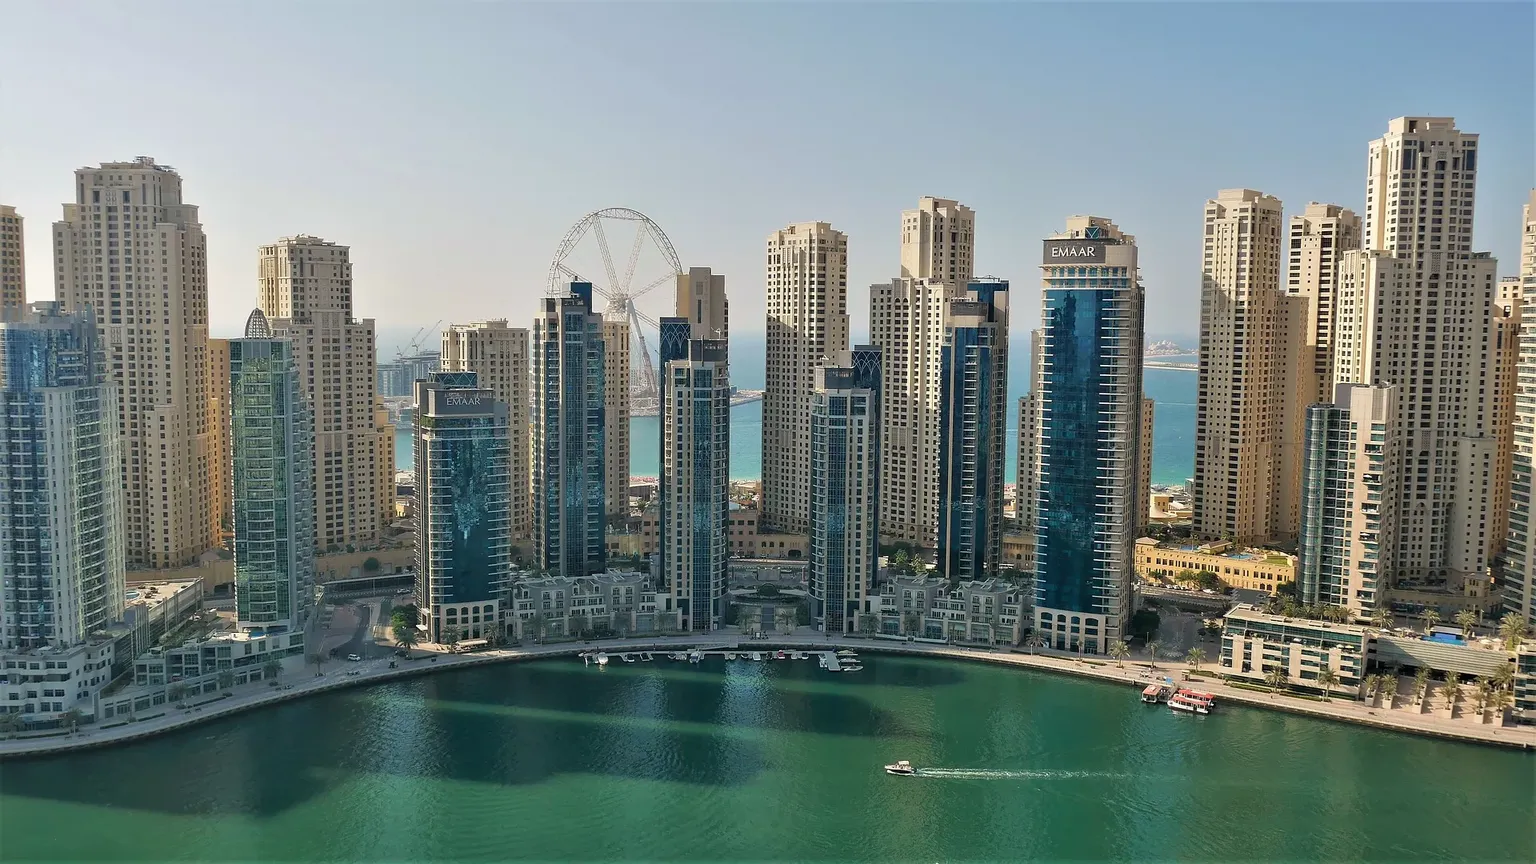 Emirate of Dubai Region | United Arab Emirates - Rated 8.1